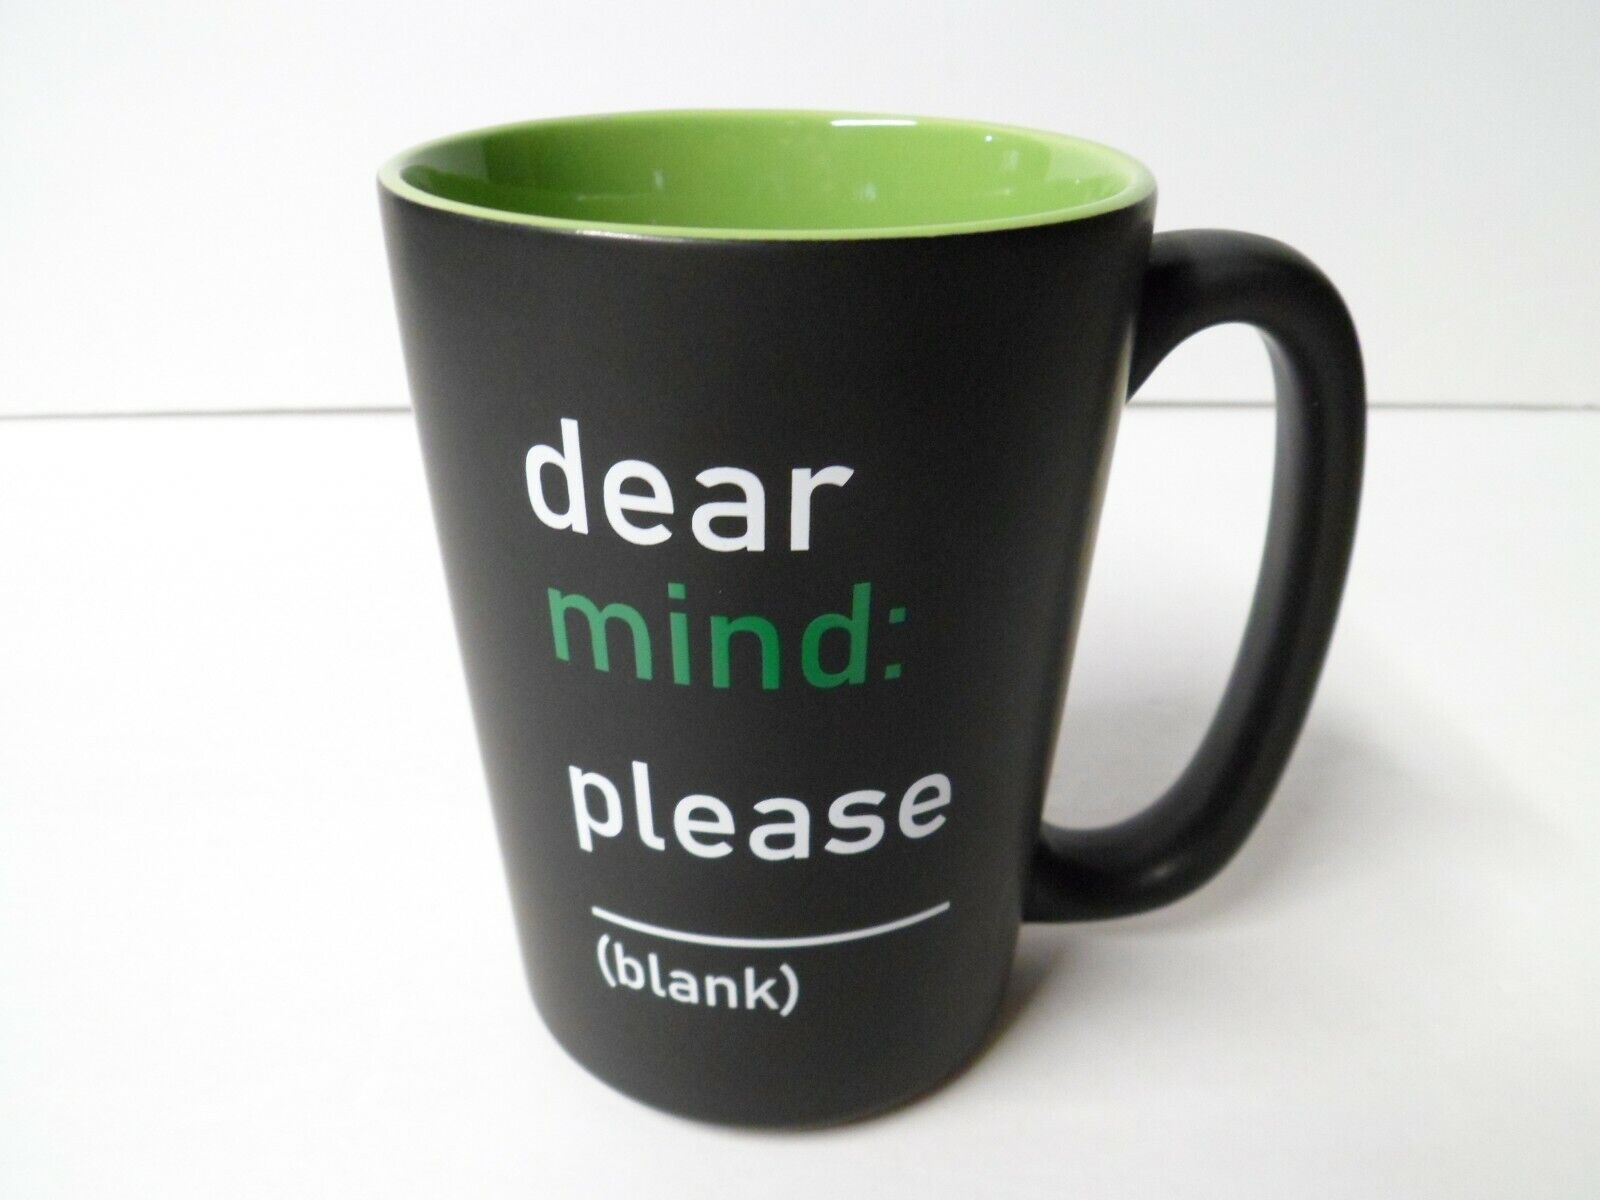 Dear Mind: Please (blank) Mug Mental Health Coffee Cup Mug Black White Green NEW